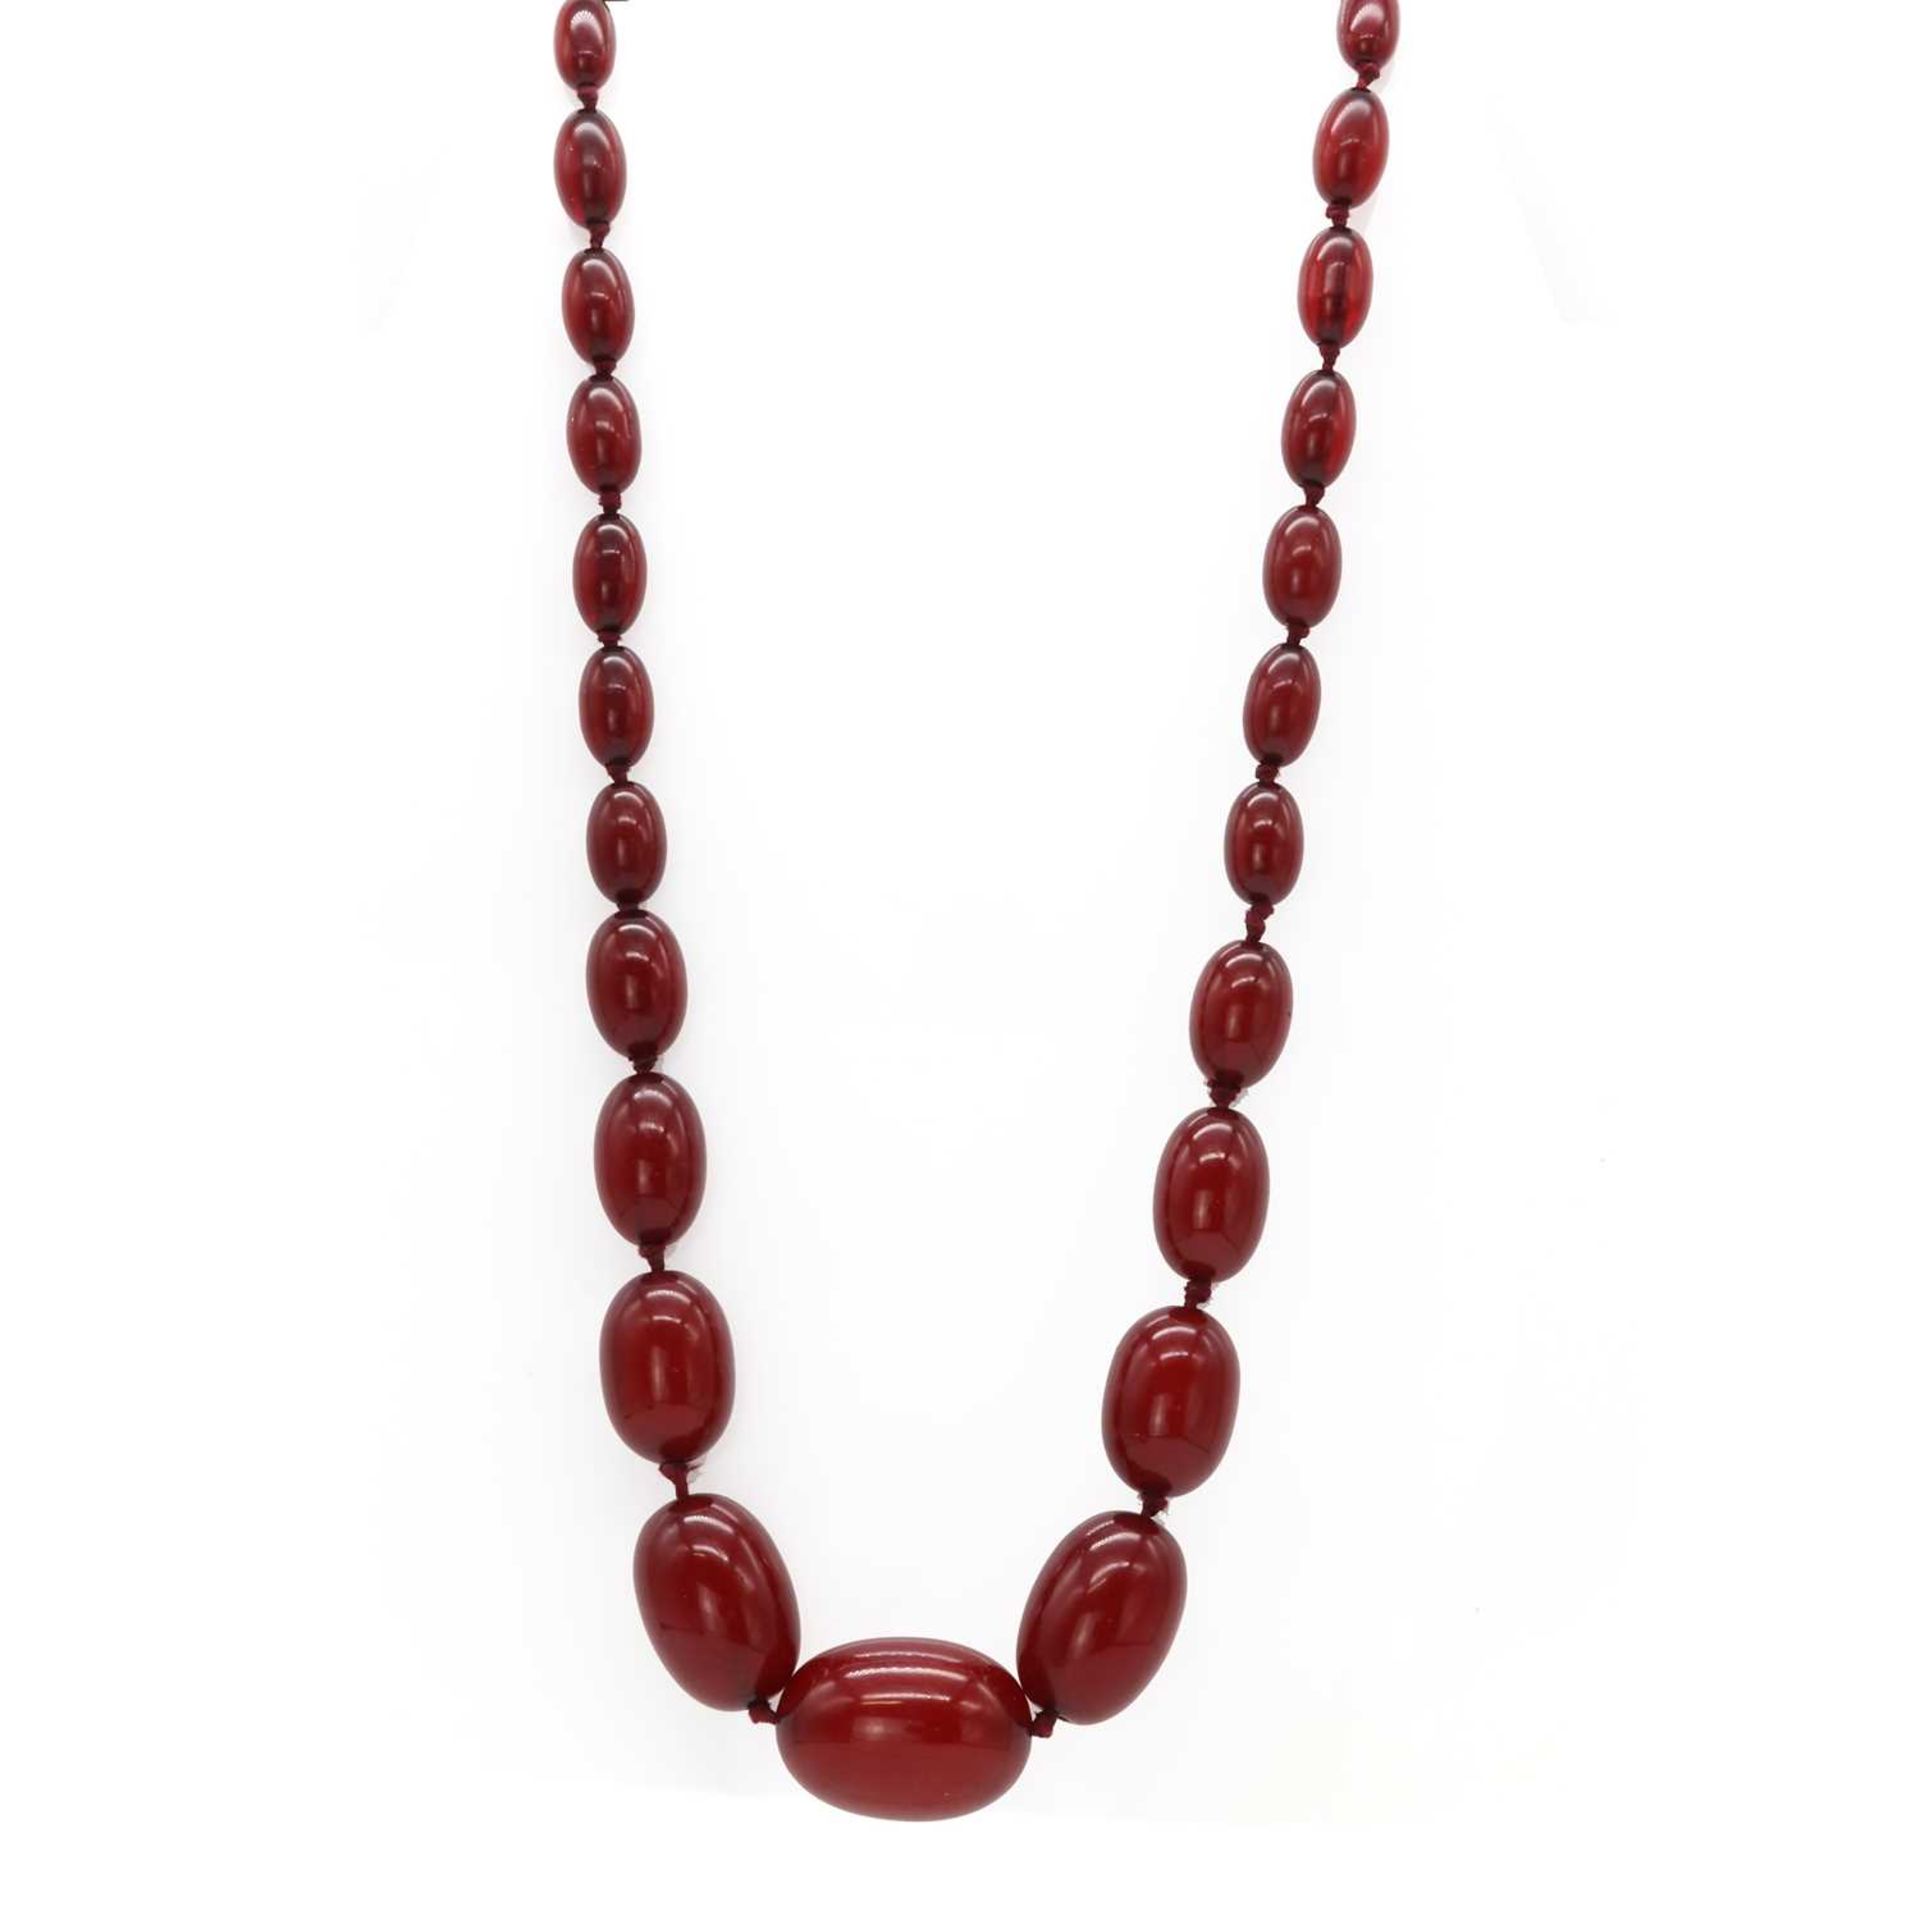 A single row graduated Bakelite bead necklace,